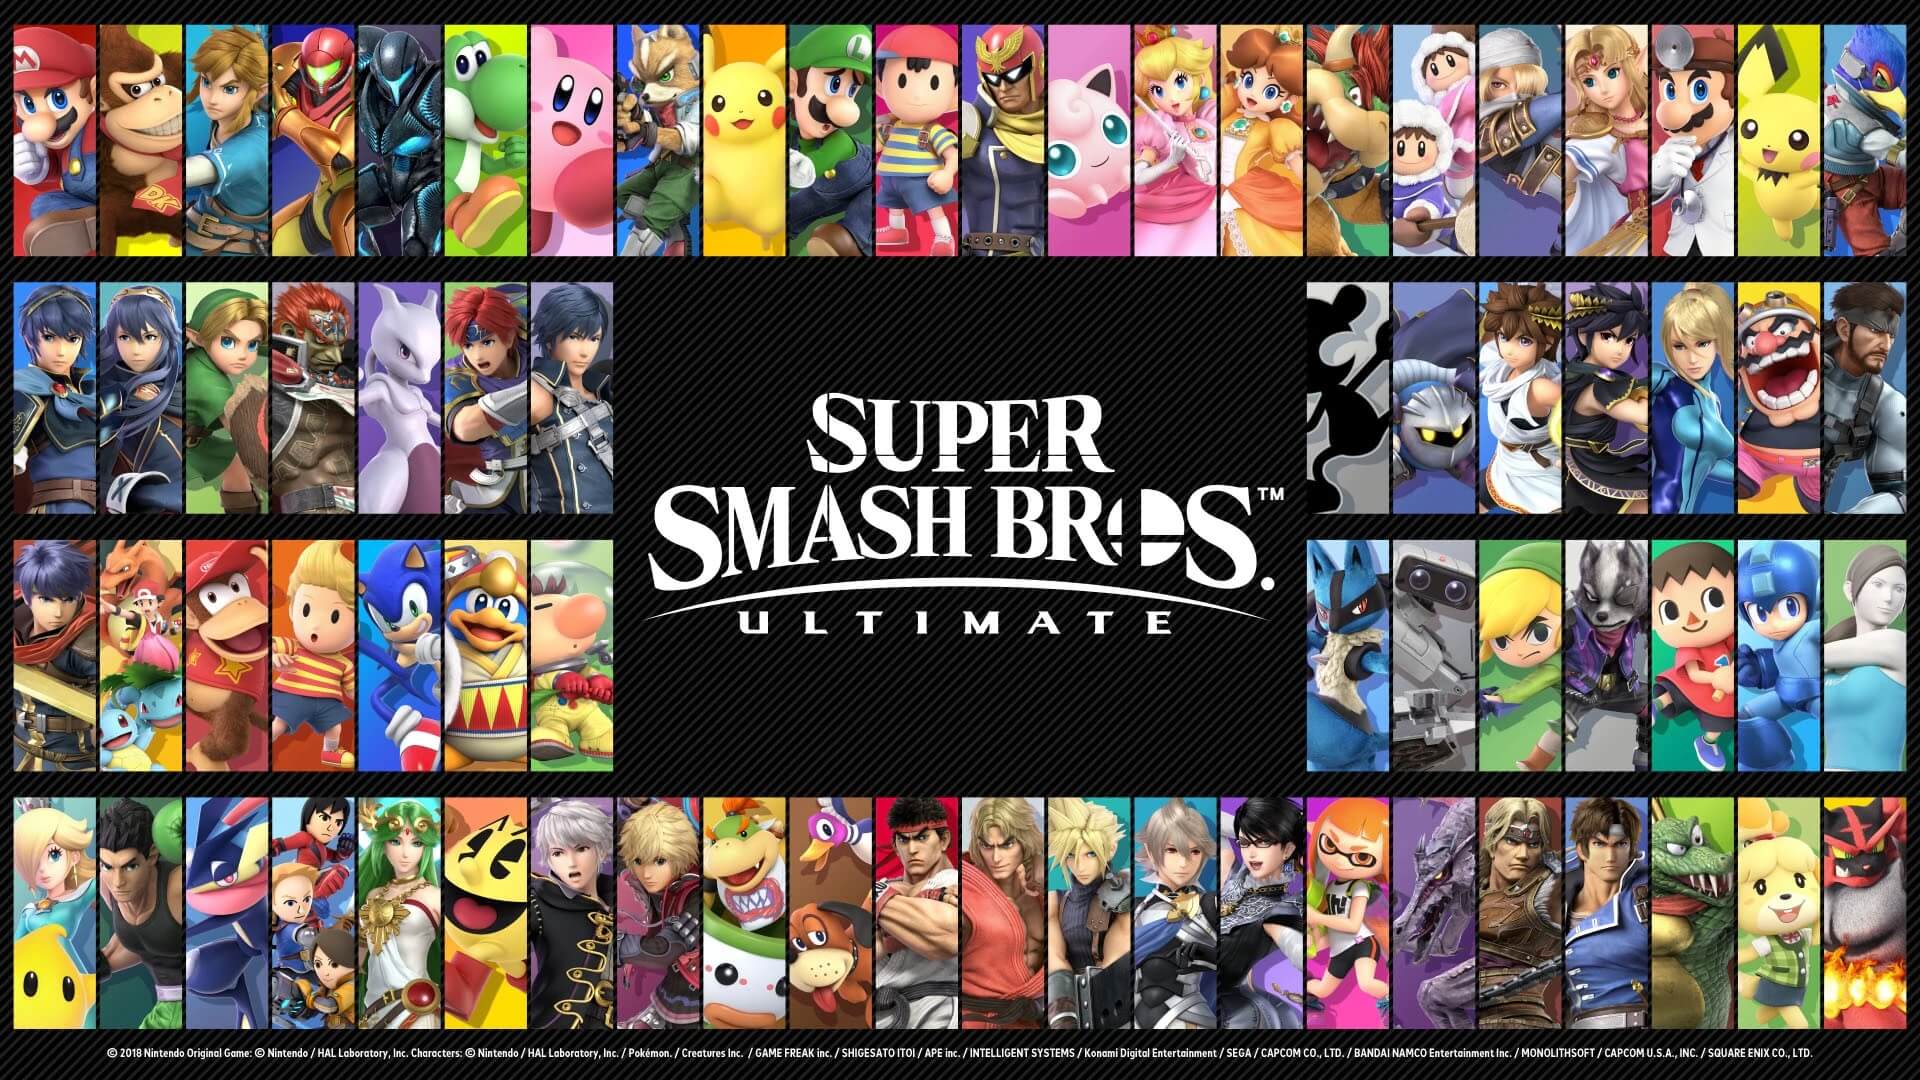 Smash Bros. Ultimate roster